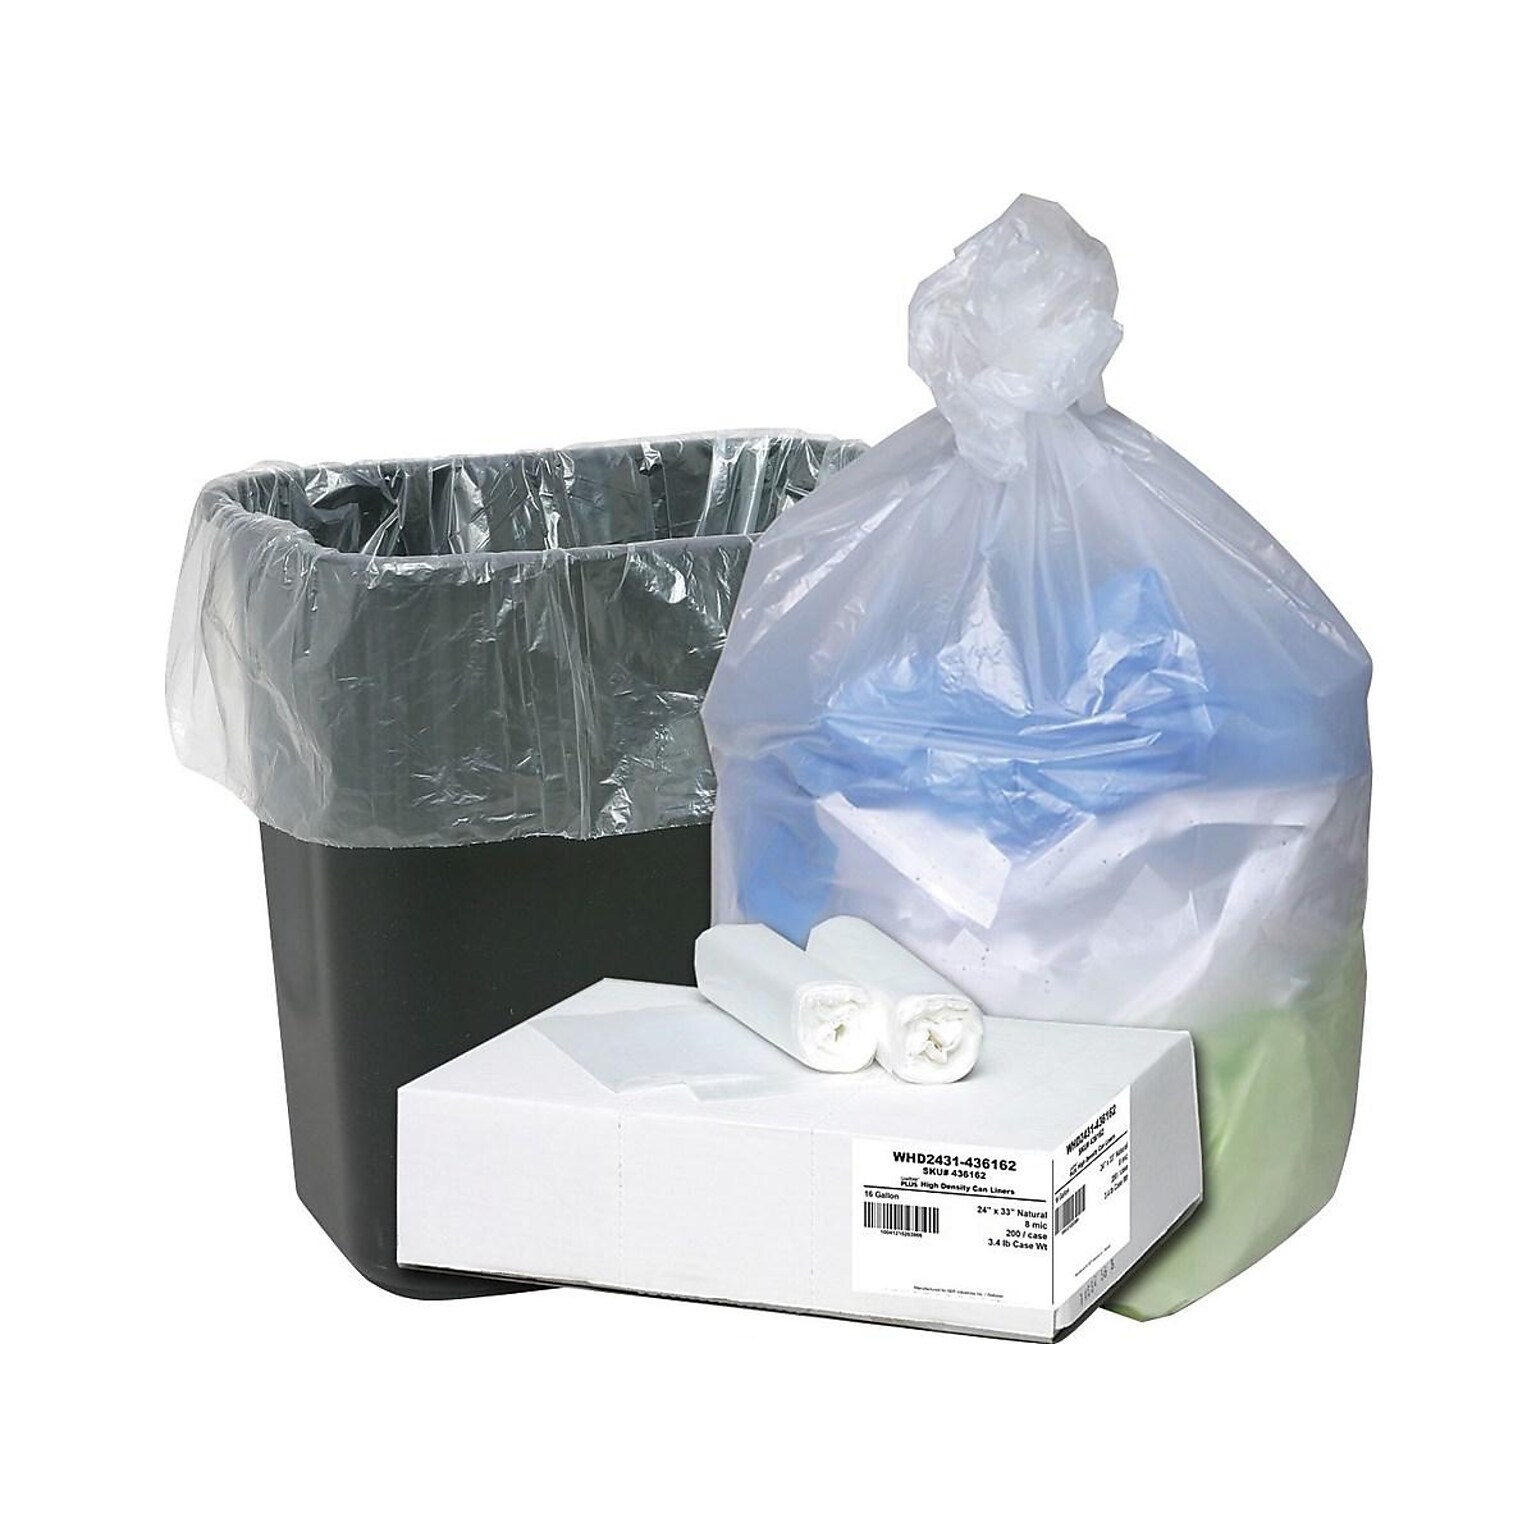 Berry Global Ultra Plus 16 Gallon Industrial Trash Bag, 24 x 32, High Density, 8 mic, Natural, 200 Bags/Box (WHD2431)